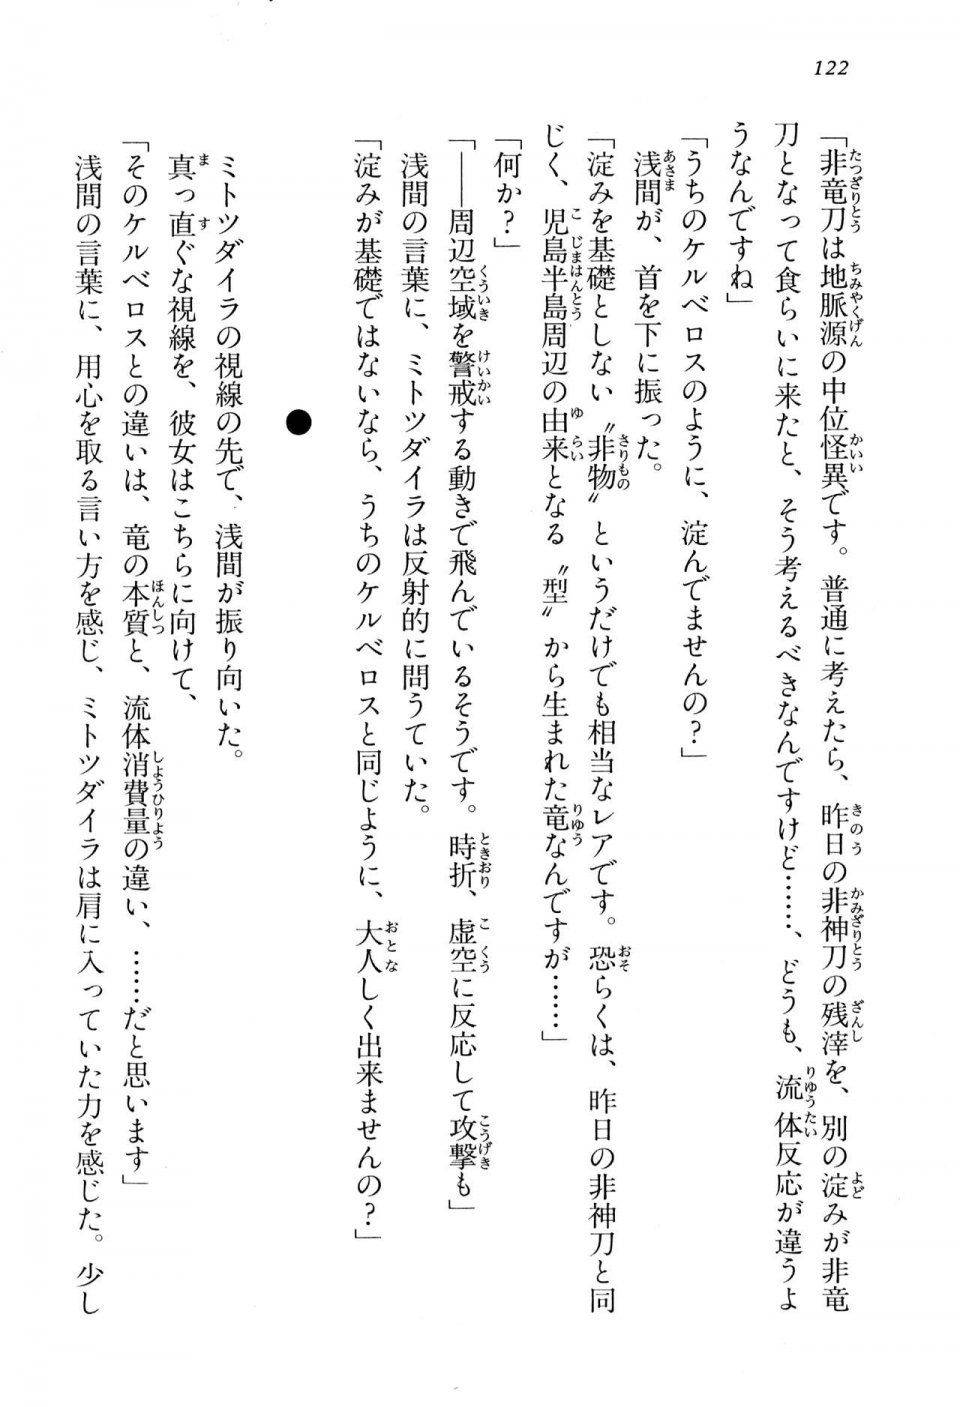 Kyoukai Senjou no Horizon BD Special Mininovel Vol 3(2A) - Photo #126